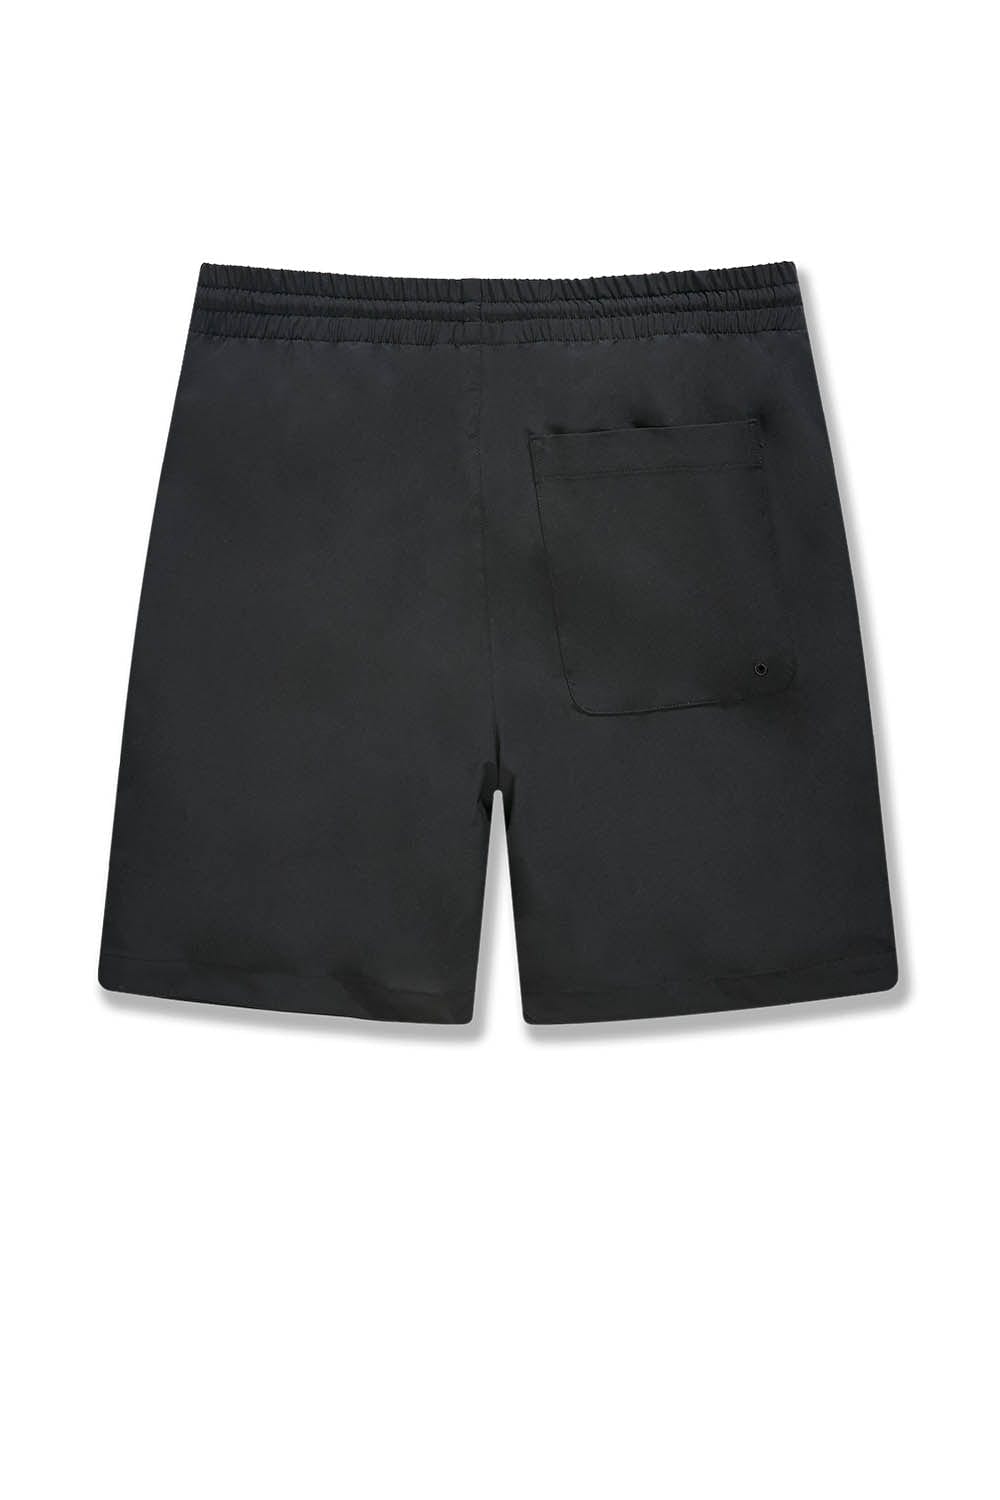 Jordan Craig Retro - El Paso Shorts (Black)